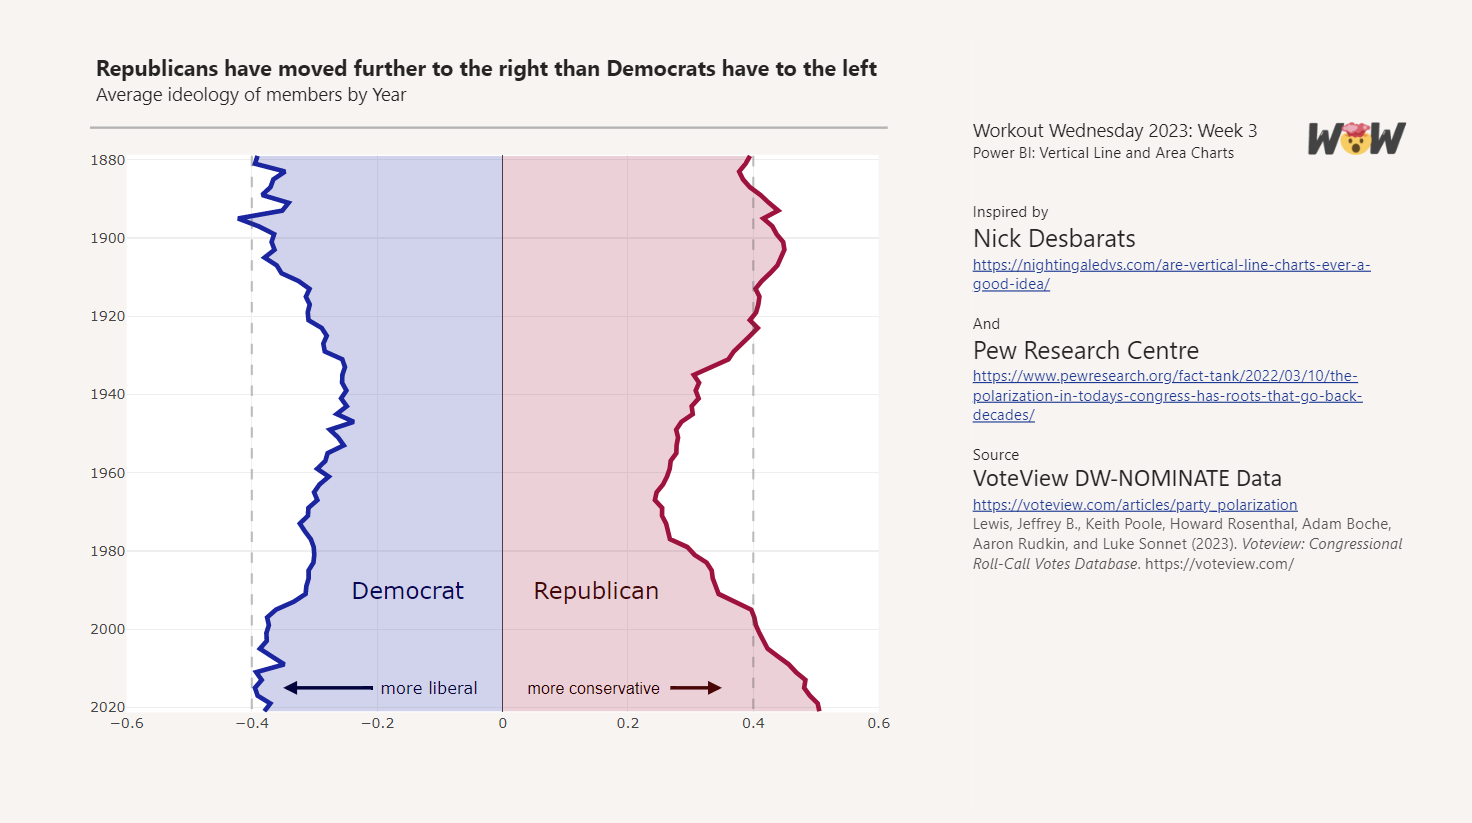 Vertical Area Chart describing Republican and Democrat shifts in ideology